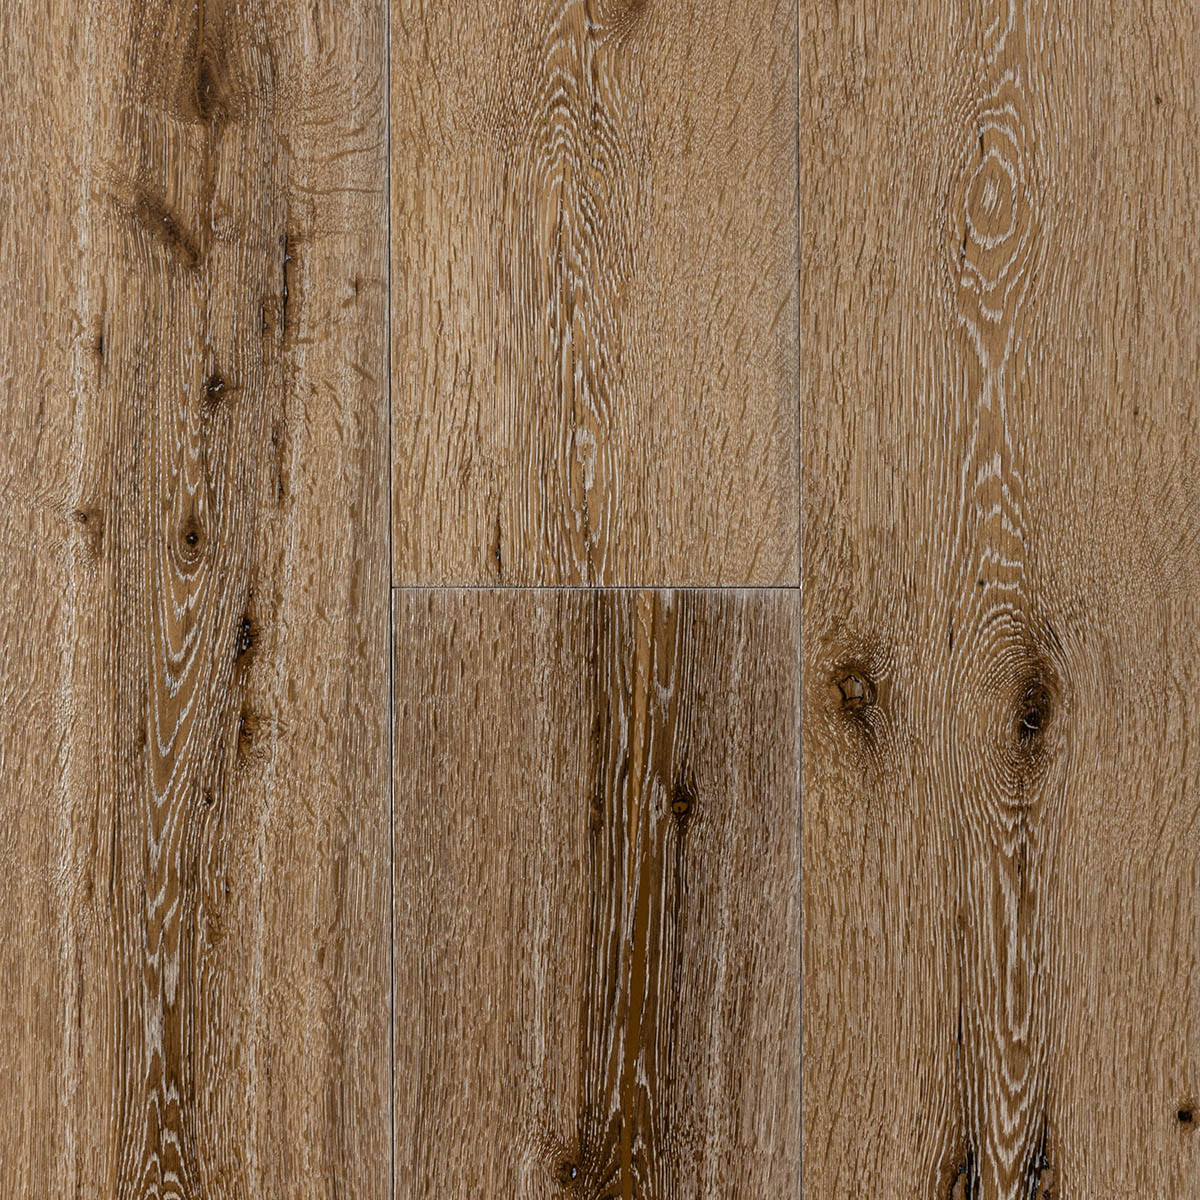 Boyd Avenue - Lime-Washed Rustic Grade European Oak Floor